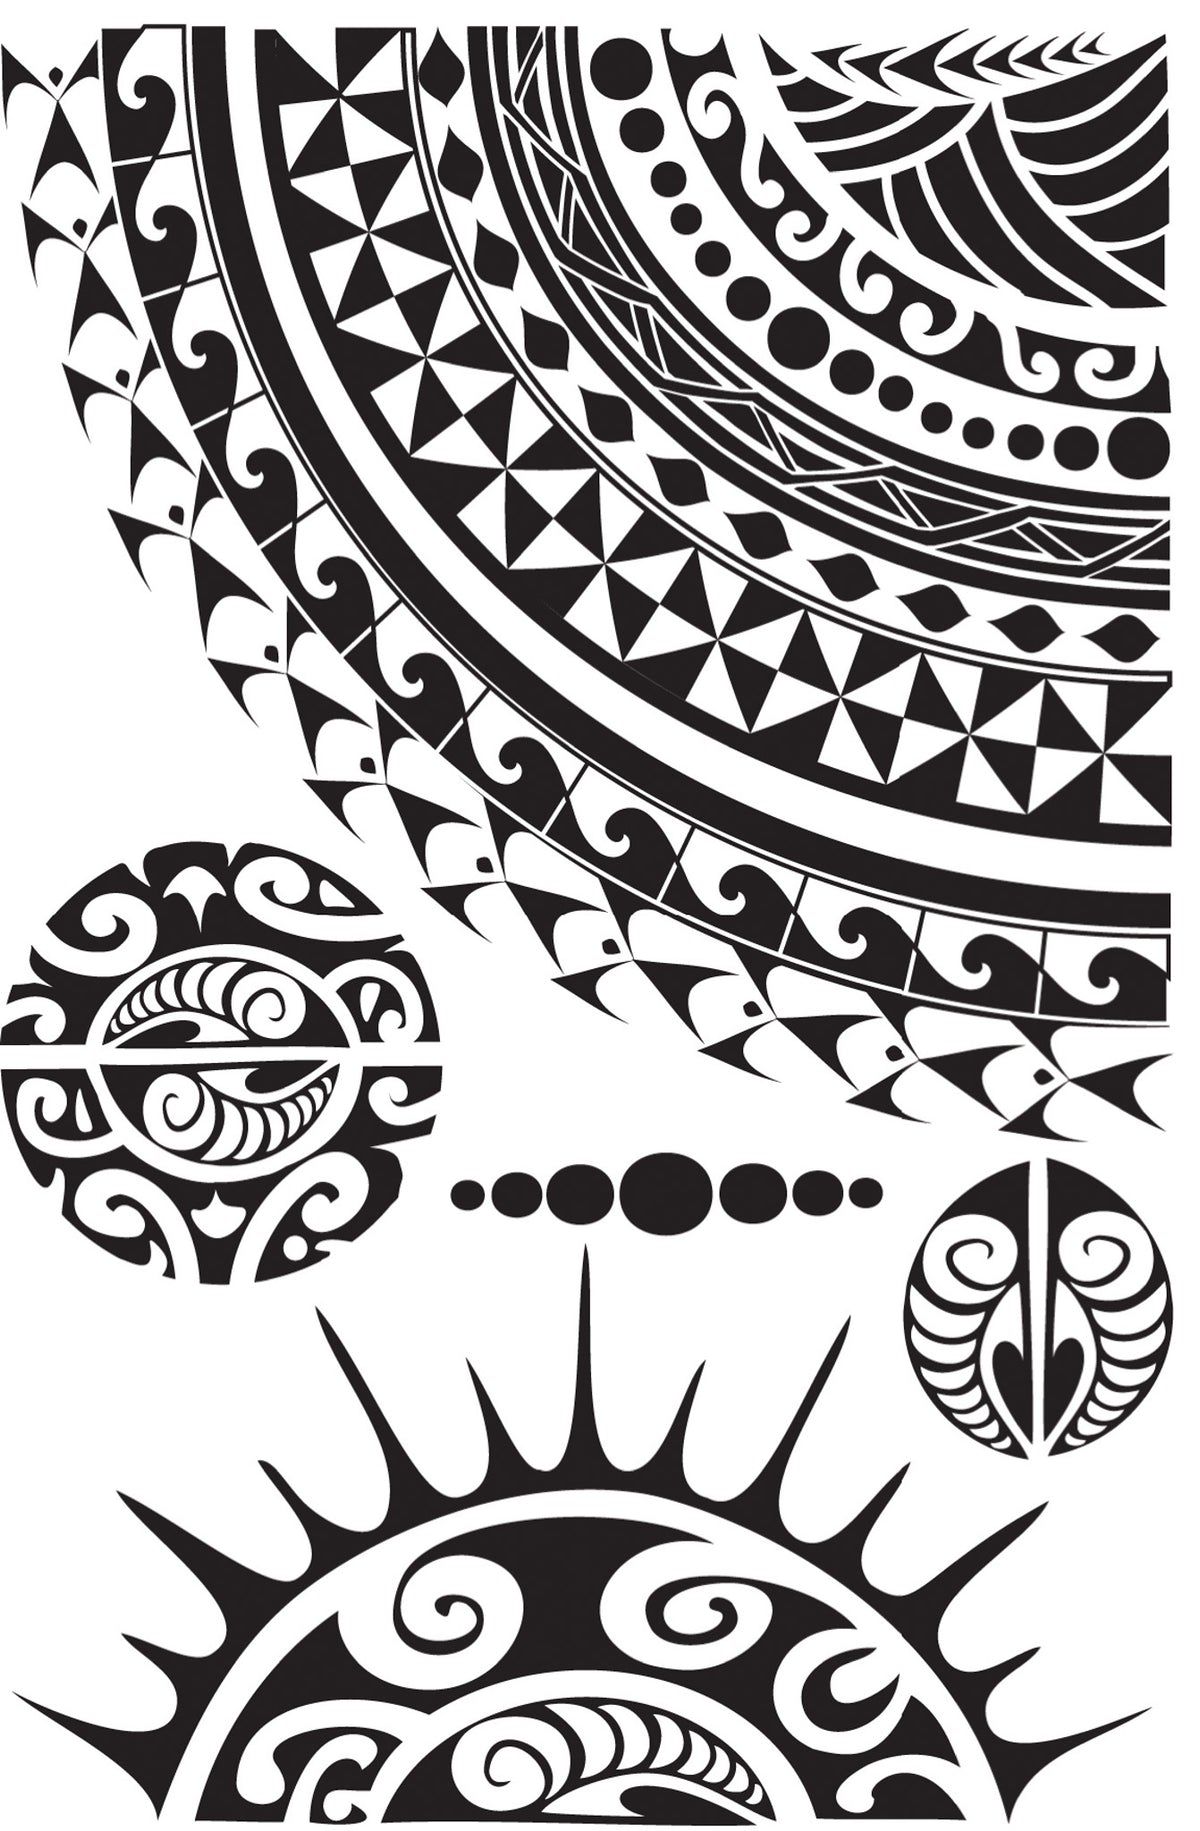 back shoulder | samoan | tatau | polynesian tattoo - YouTube